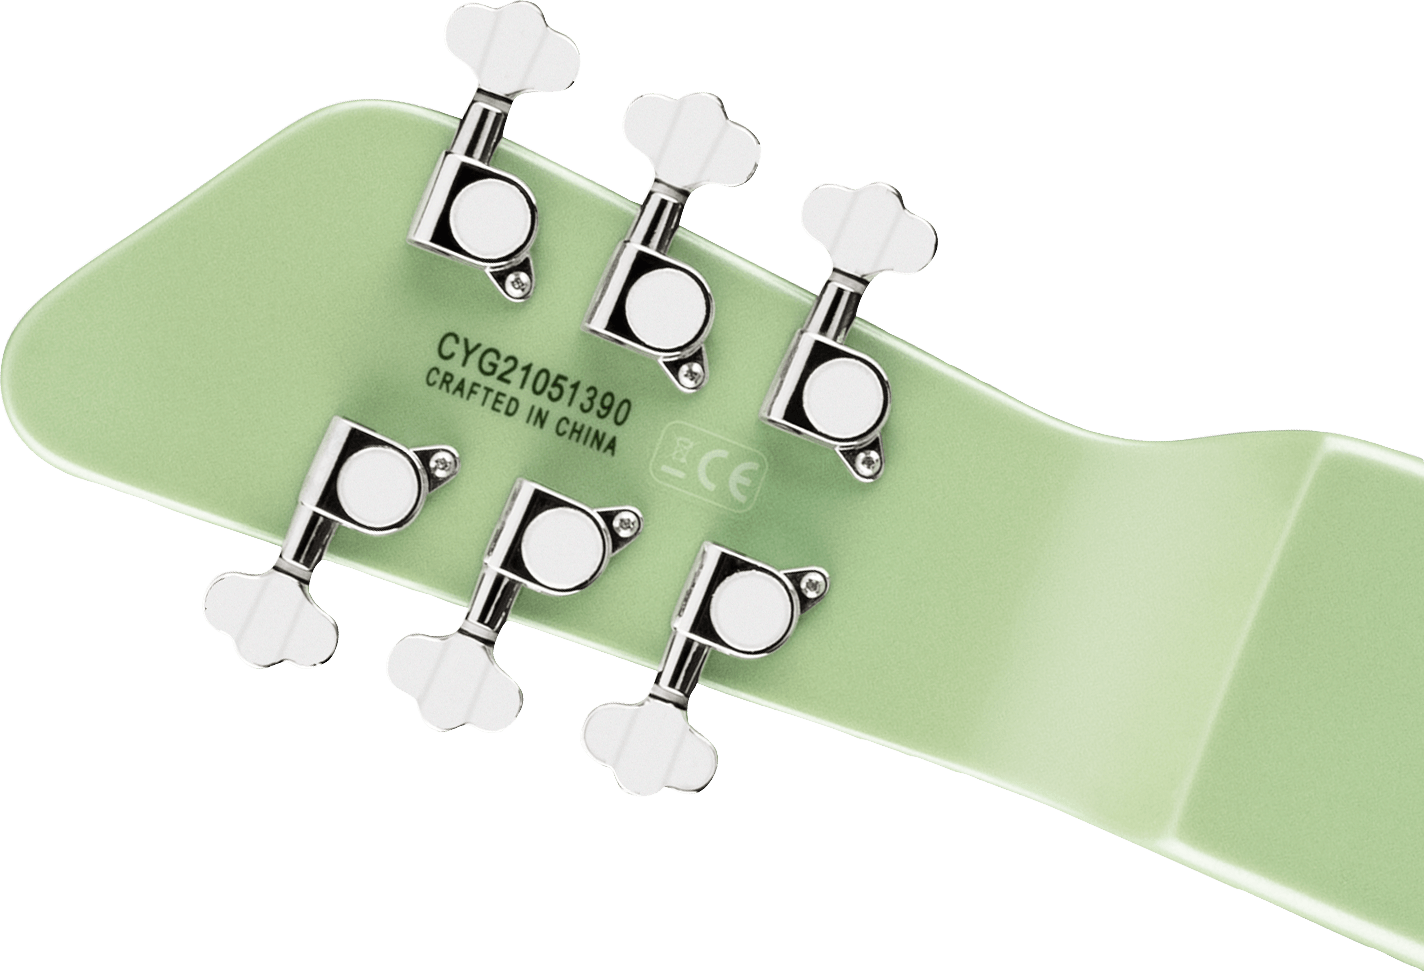 Gretsch G5700 Electromatic Lap Steel - Broadway Jade - Lap steel guitar - Variation 3